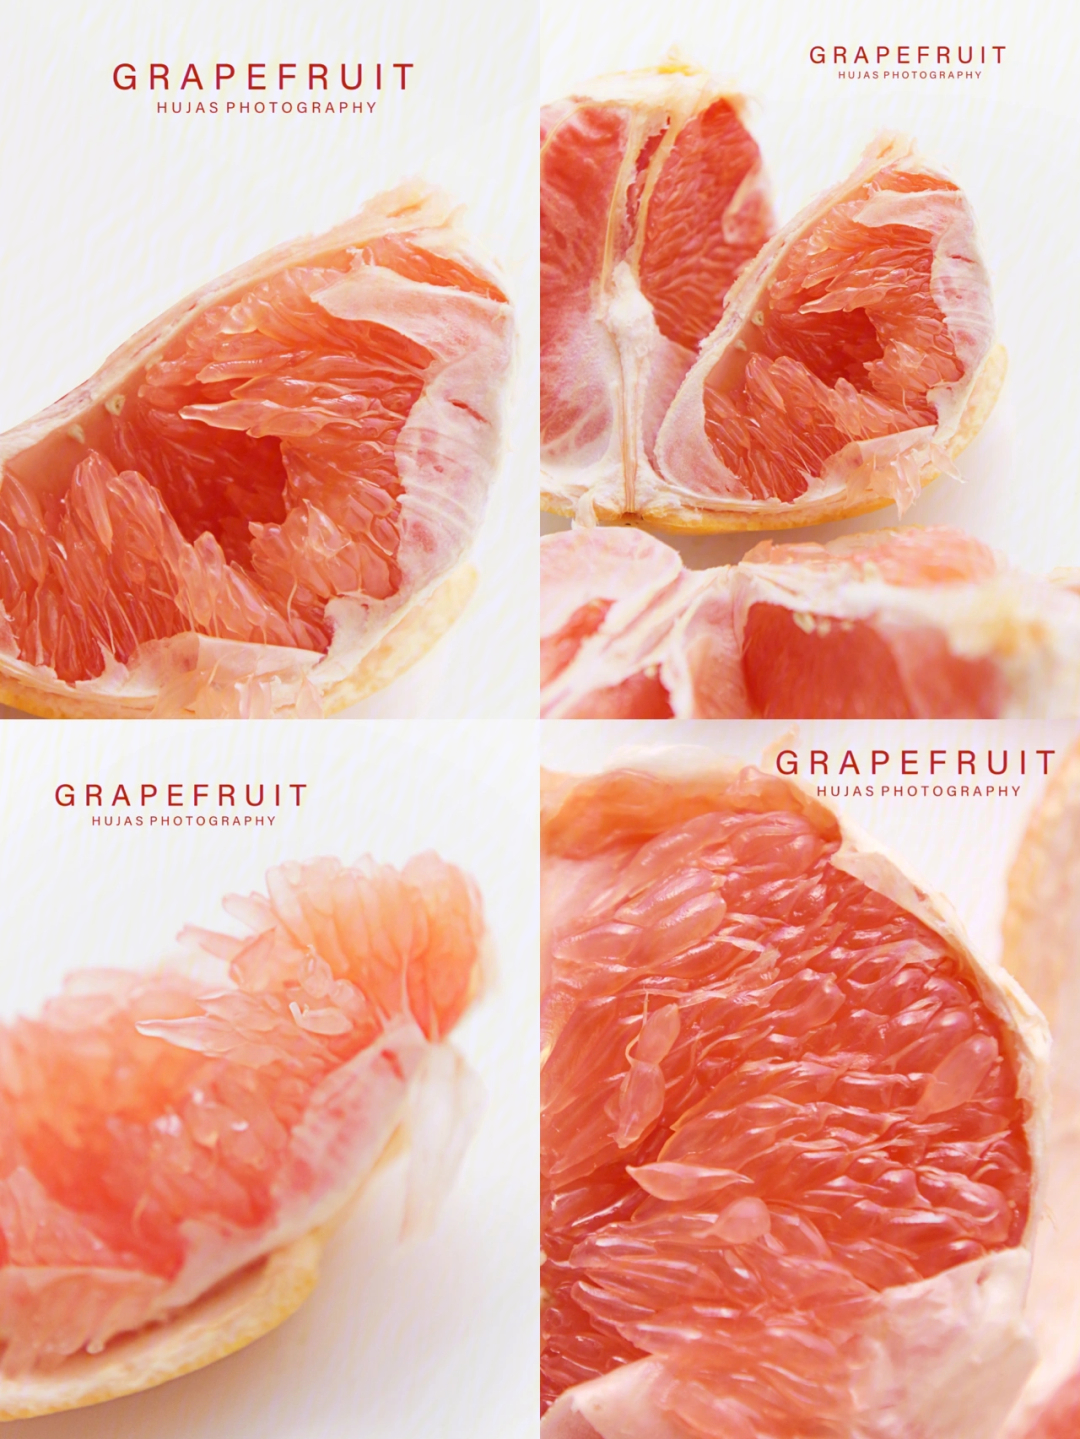 stargrapefruit图片